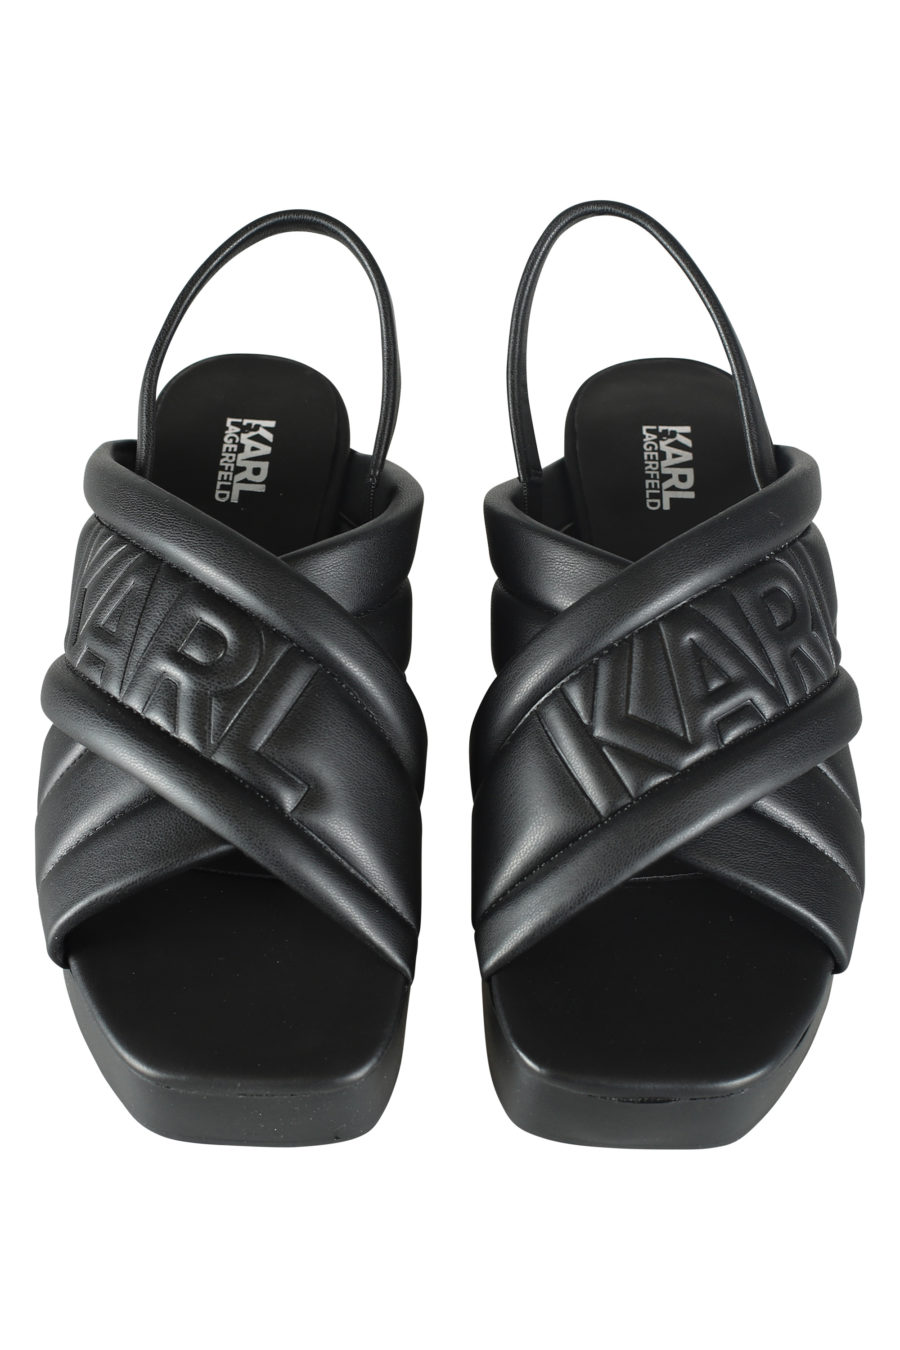 Sandalias negras acolchonadas con logo negro y plataforma - IMG 5359